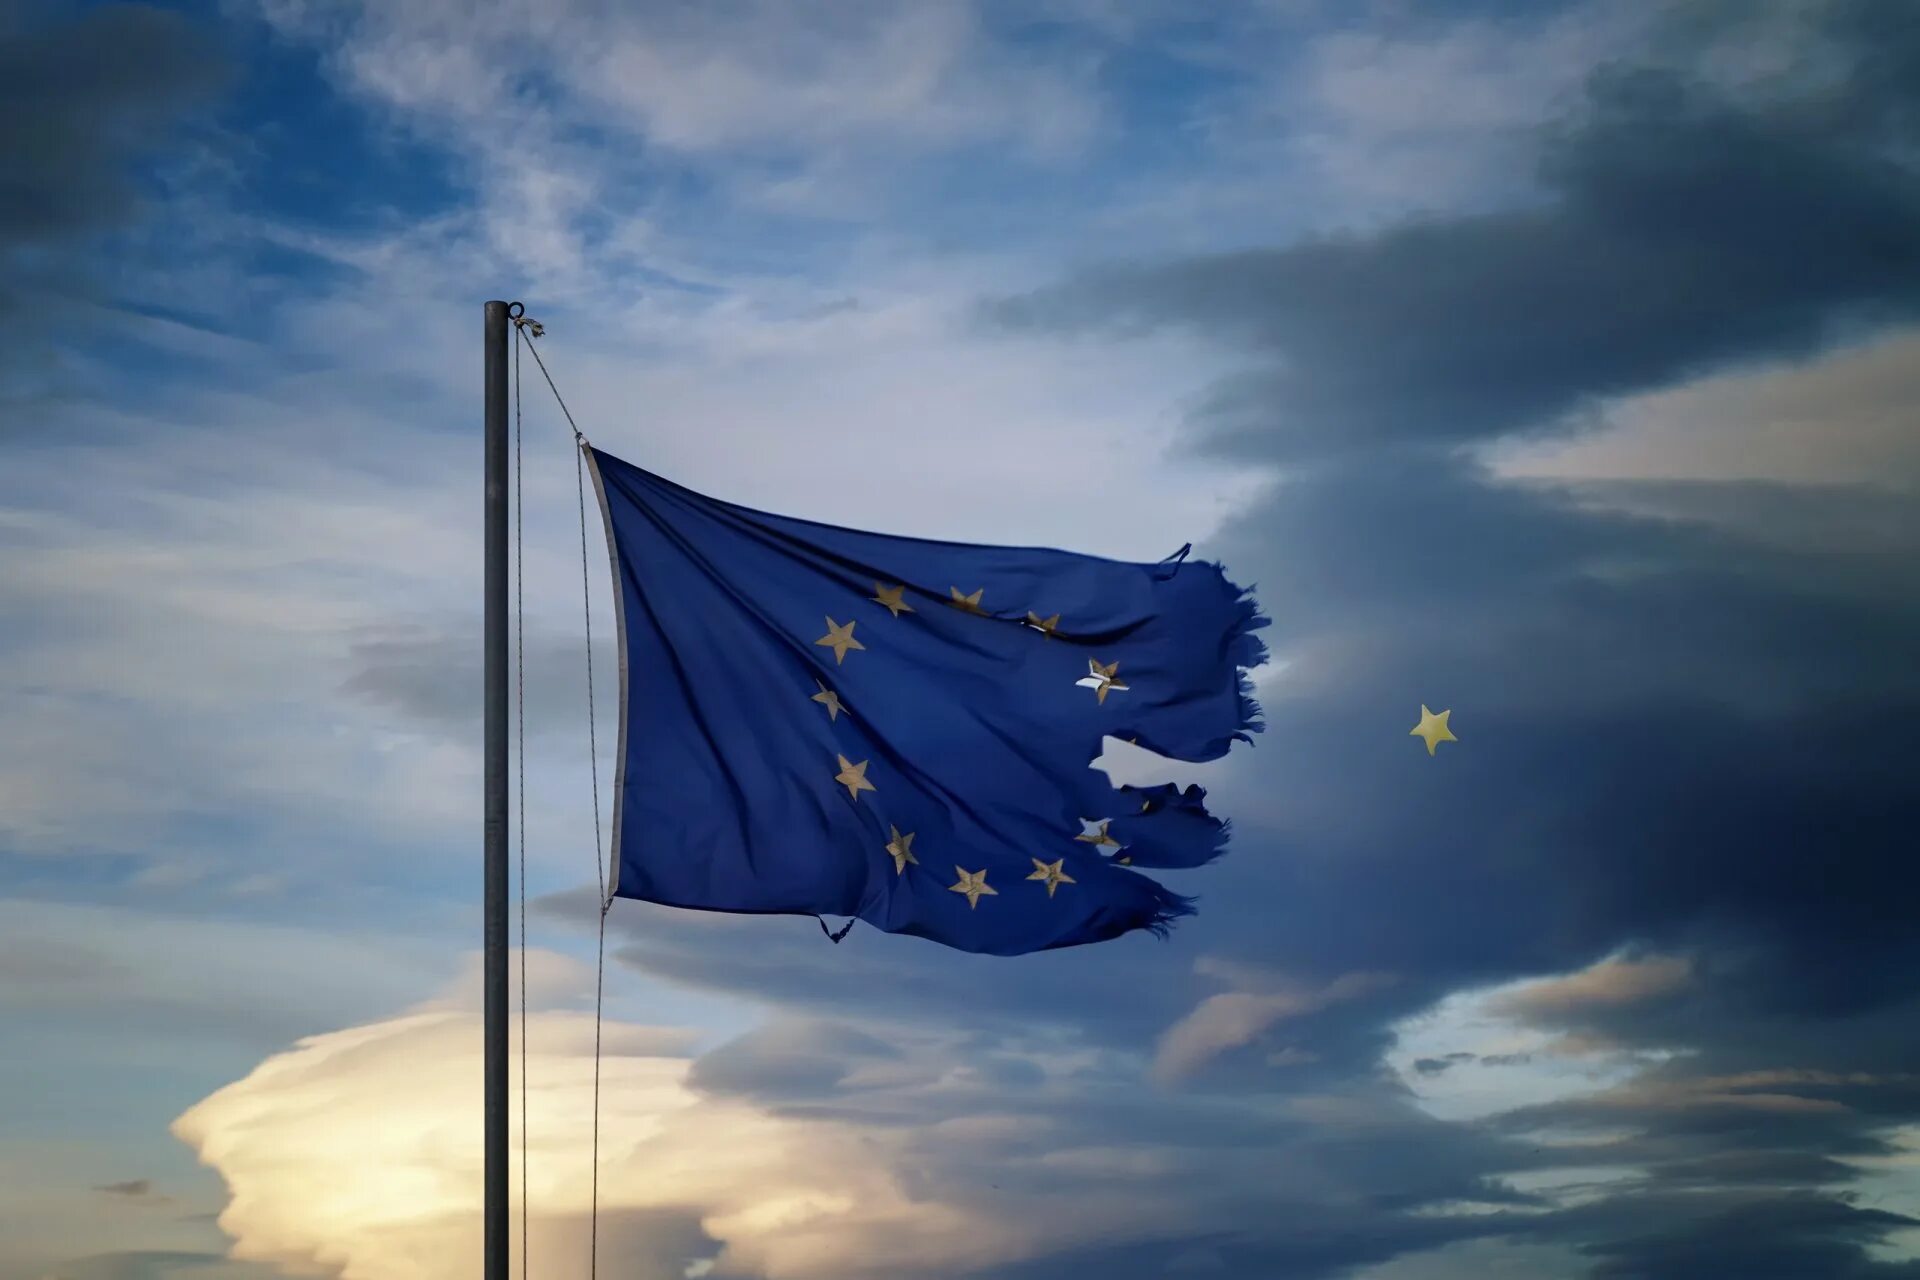 Звезды флага евросоюза. Флаг European Union. Европейский Союз. Флаг ЕС на флагштоке. Еврокомиссия флаг.